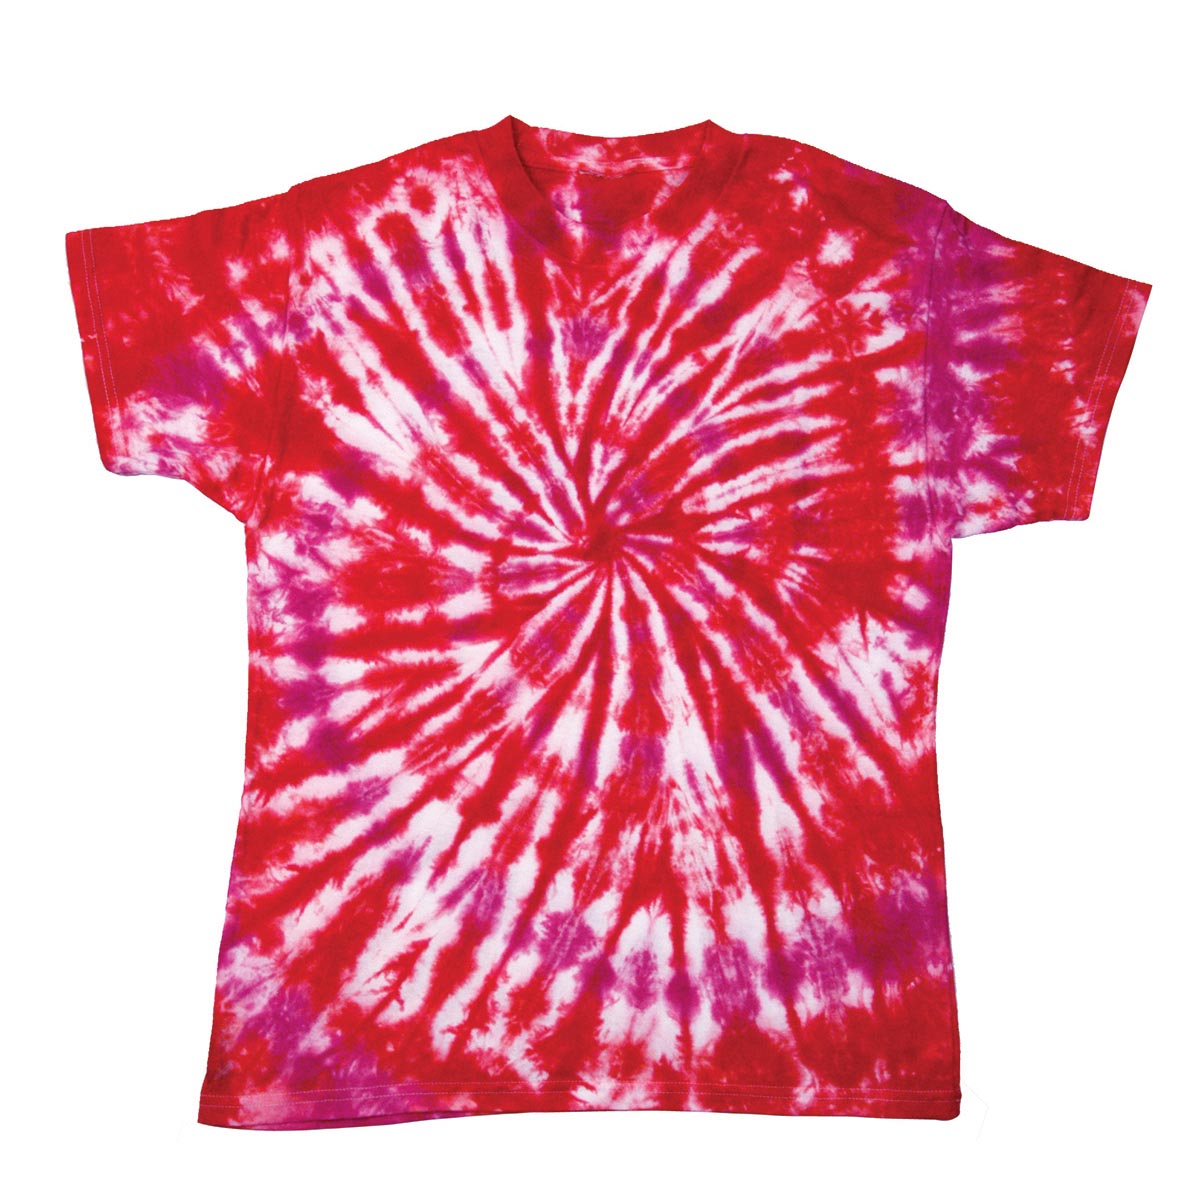 Jacquard  Tie-Dye Kit for T-Shirts - Ruby Jewel Tone